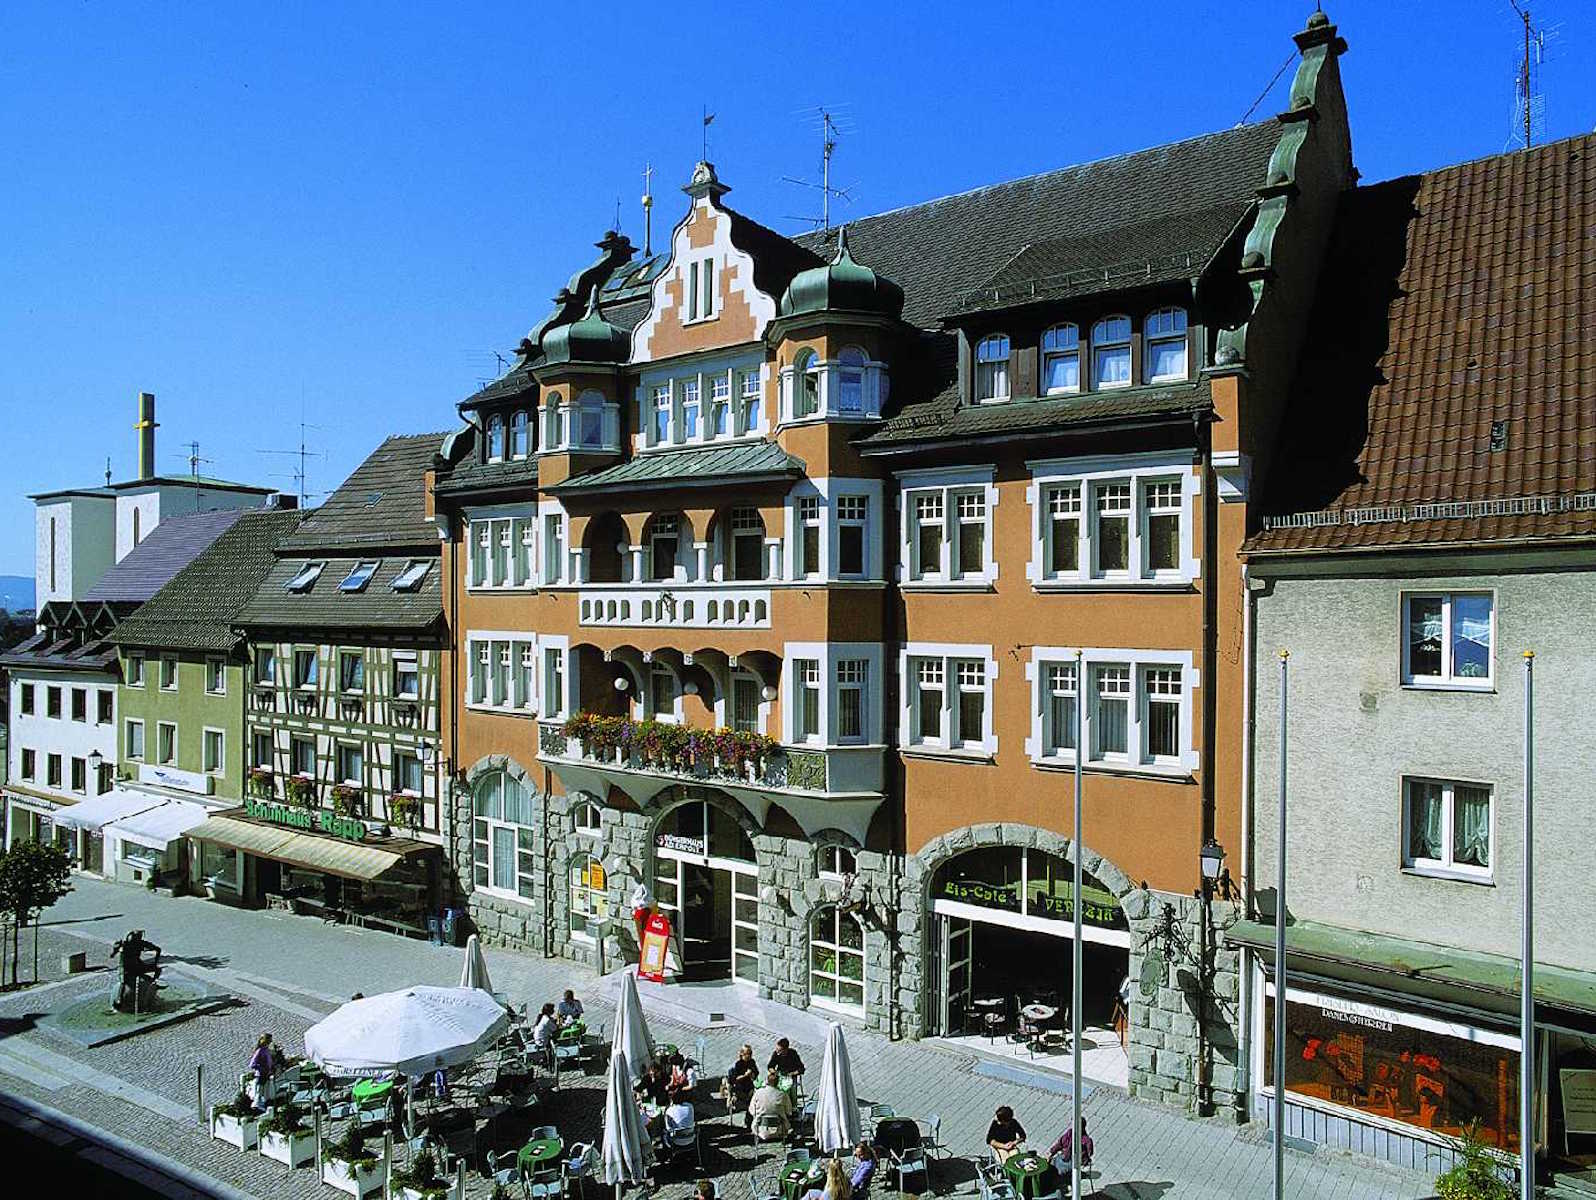  "Bürgerhaus Adler-Post" 